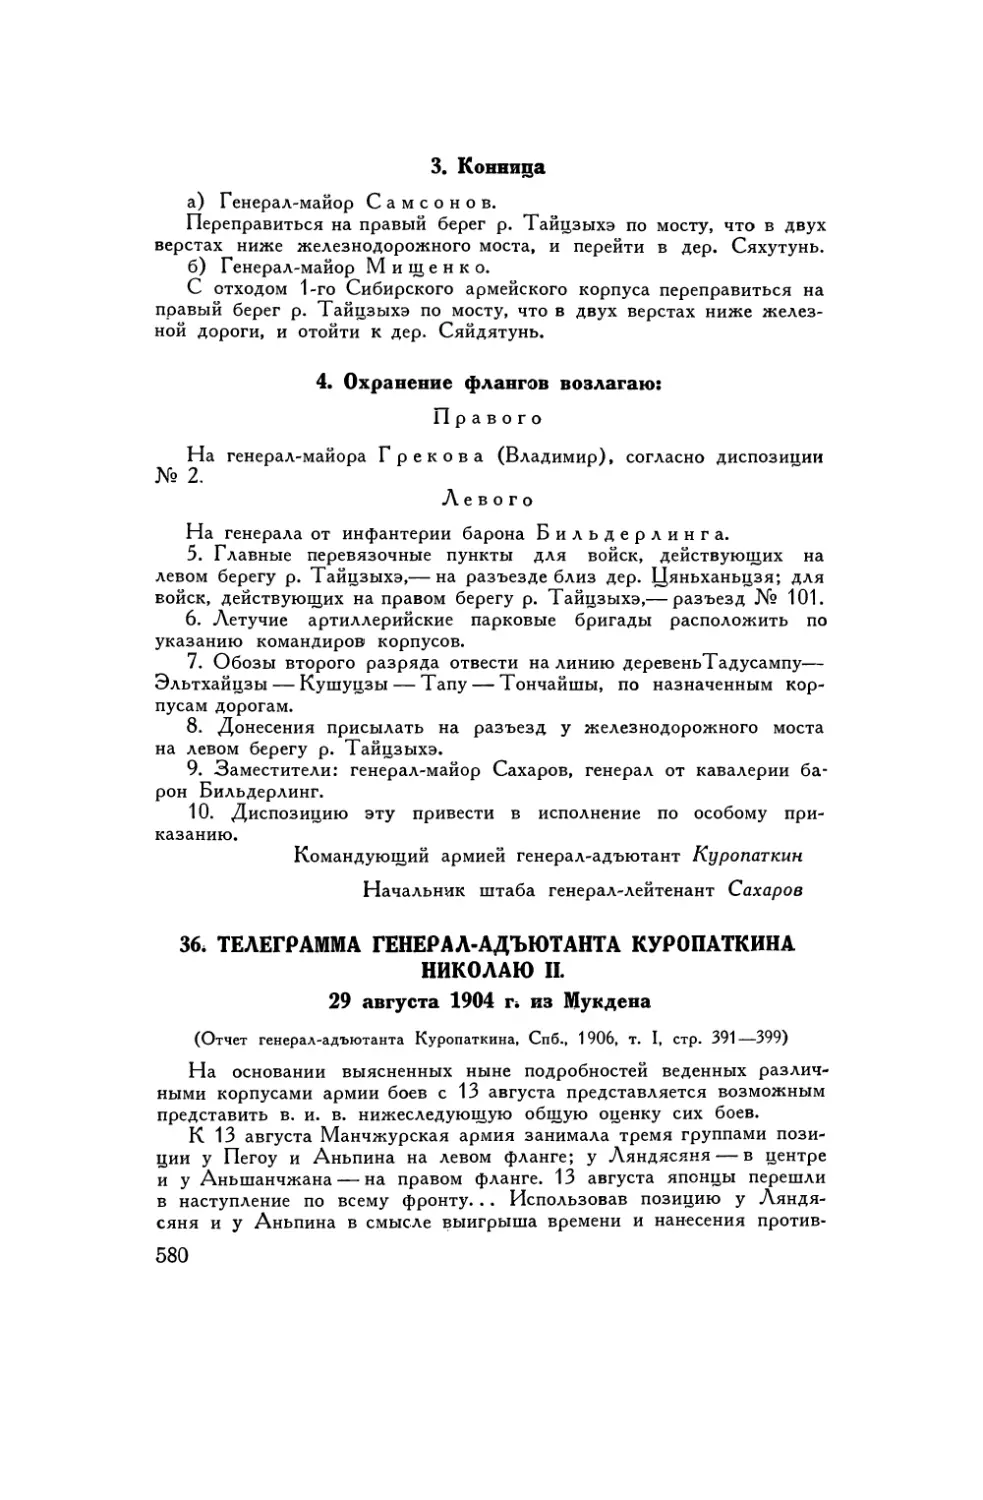 36. Телеграмма генерал-адъютанта Куропаткина Николаю II 29 августа 1904 г. из Мукдена